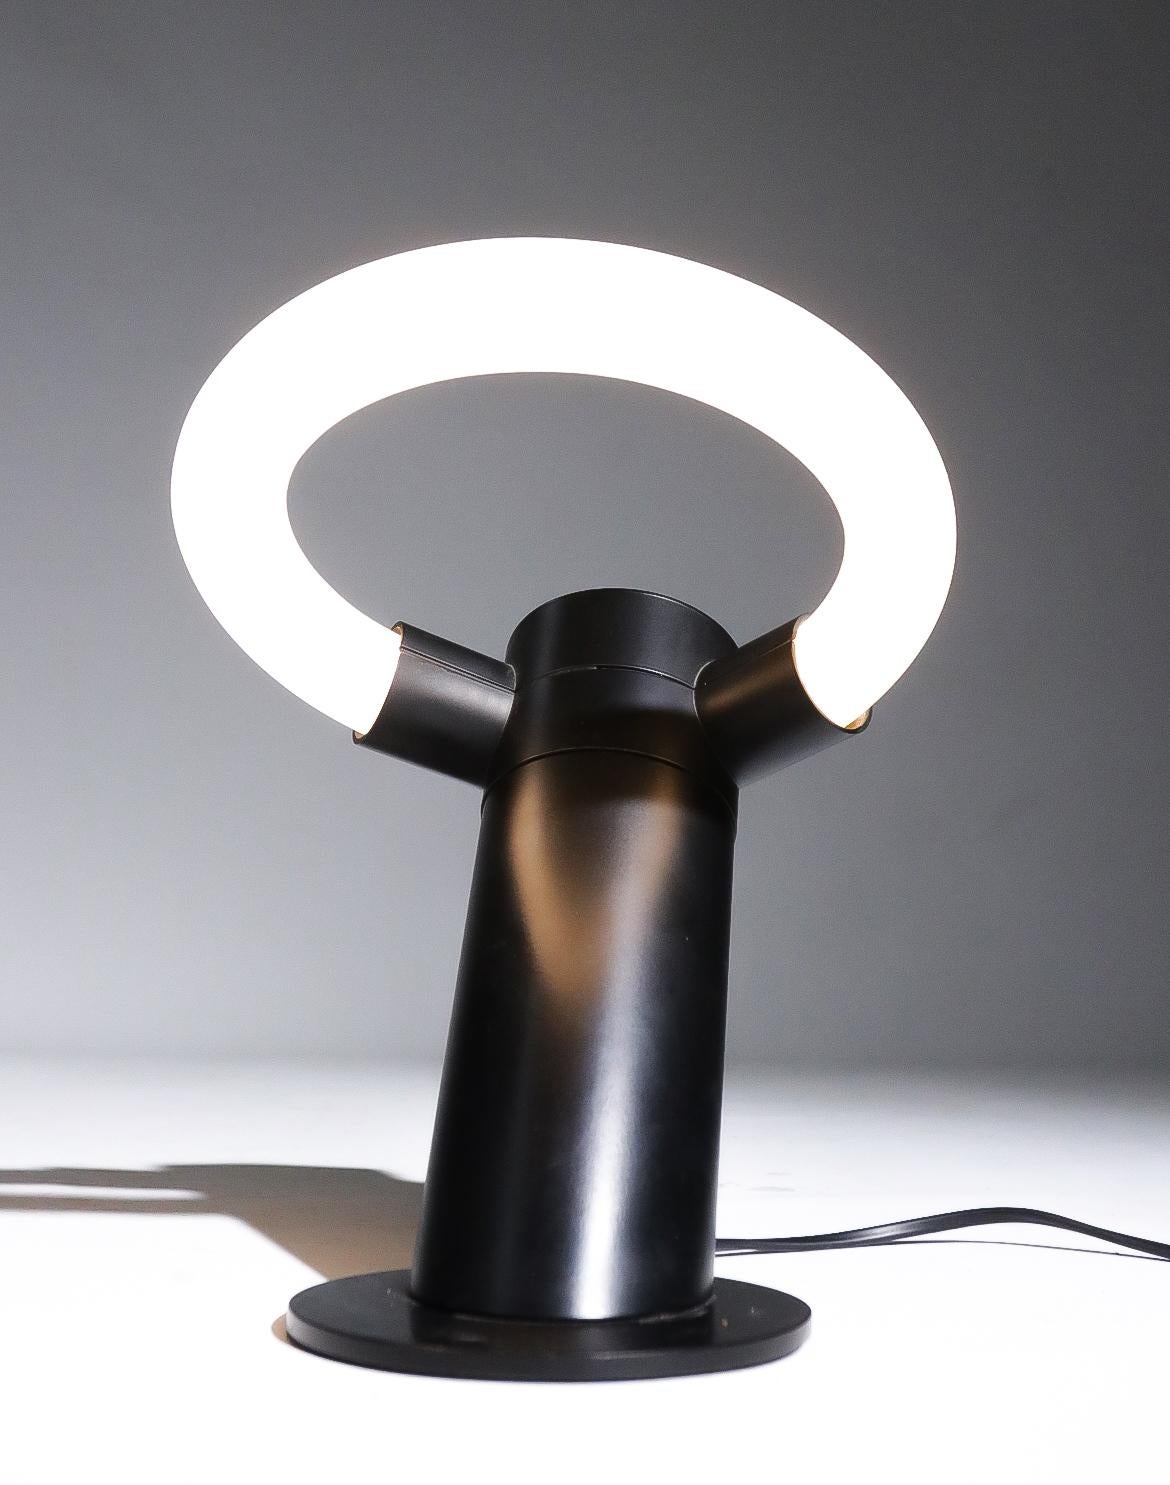 Aluminum Rare Frans van Nieuwenborg 'The Saint' Industrial Dutch Design Lamp